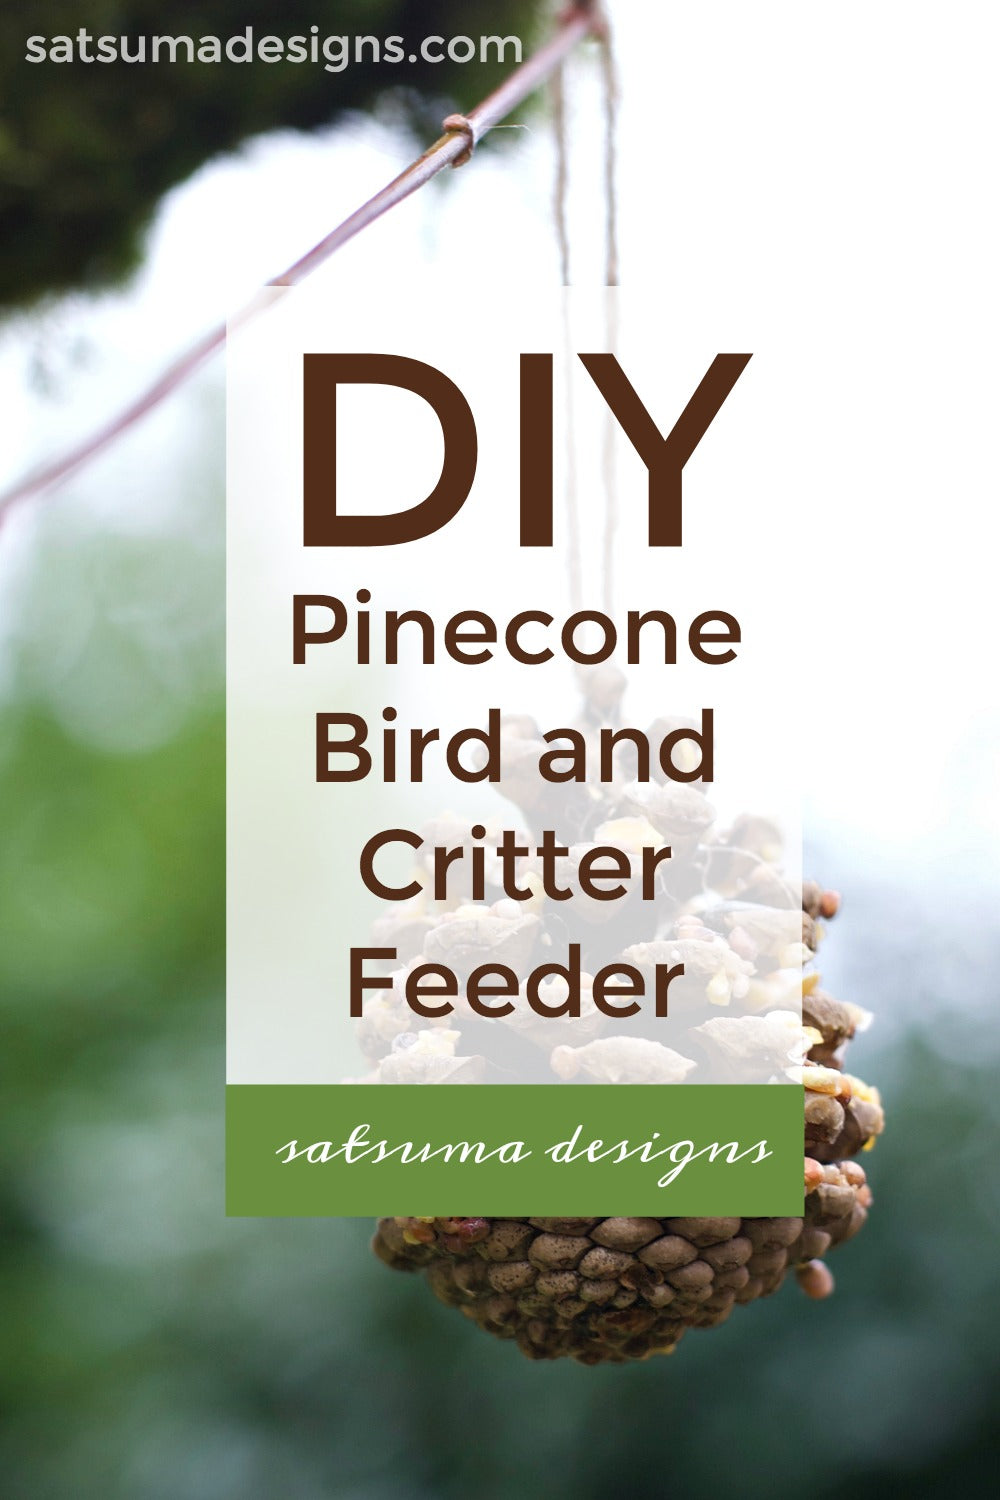 DIY Pinecone Bird and Critter Feeder